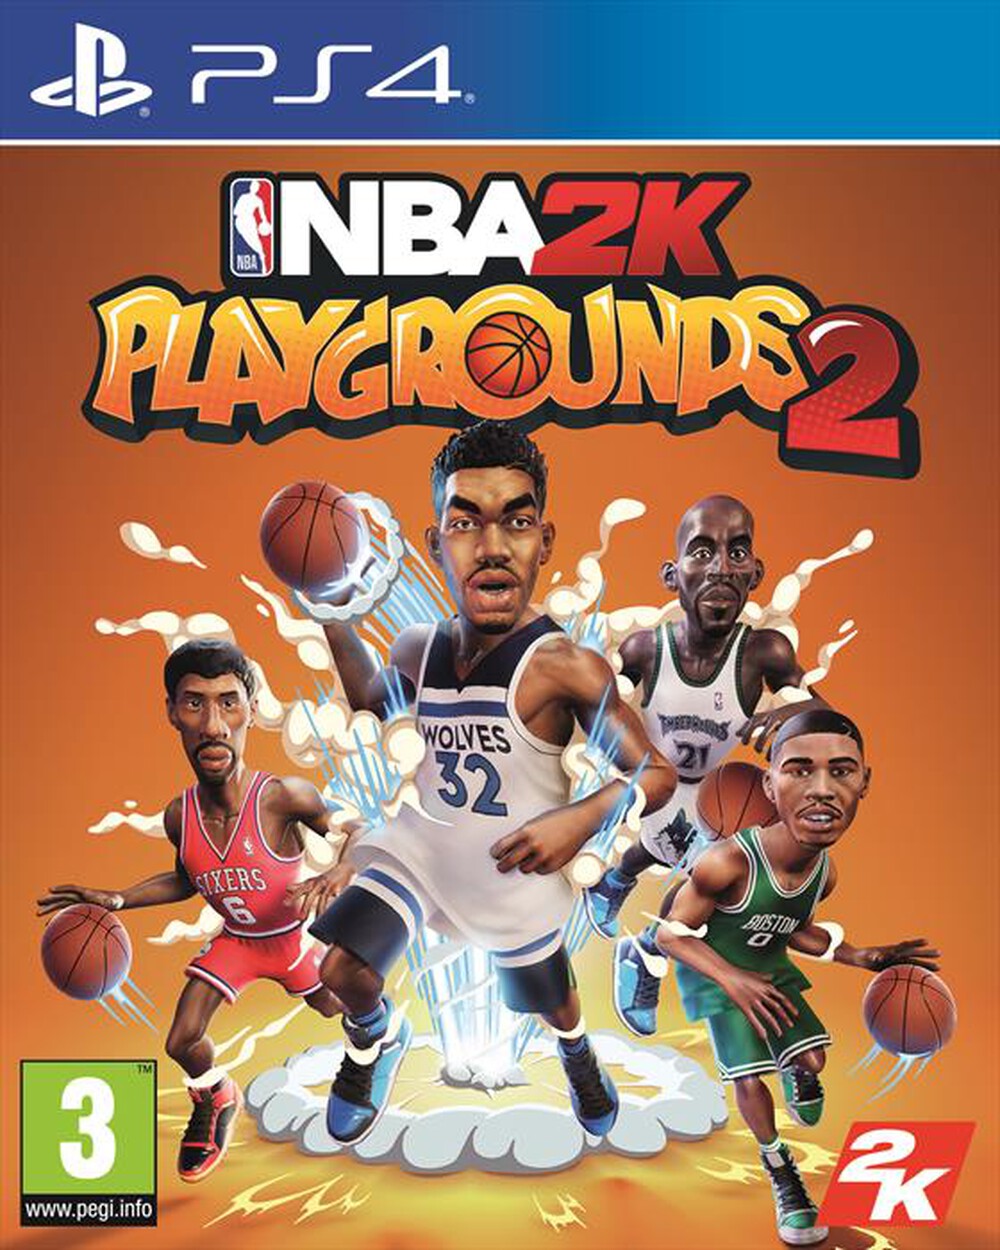 "2K GAMES - NBA 2K PLAYGROUNDS 2 PS4 - "